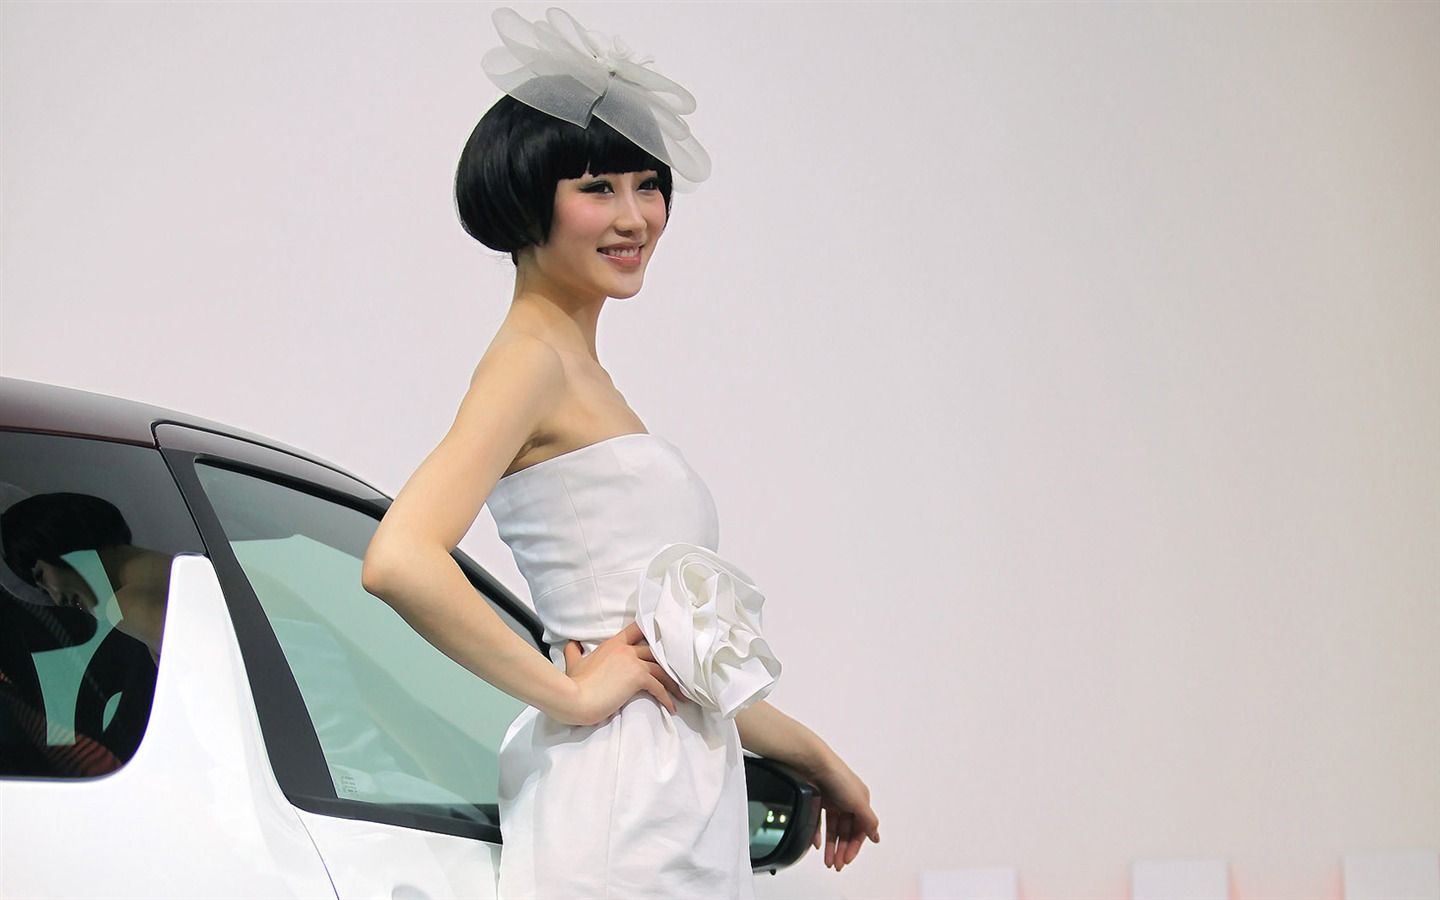 2010 Peking autosalonu modely aut odběrem (2) #8 - 1440x900